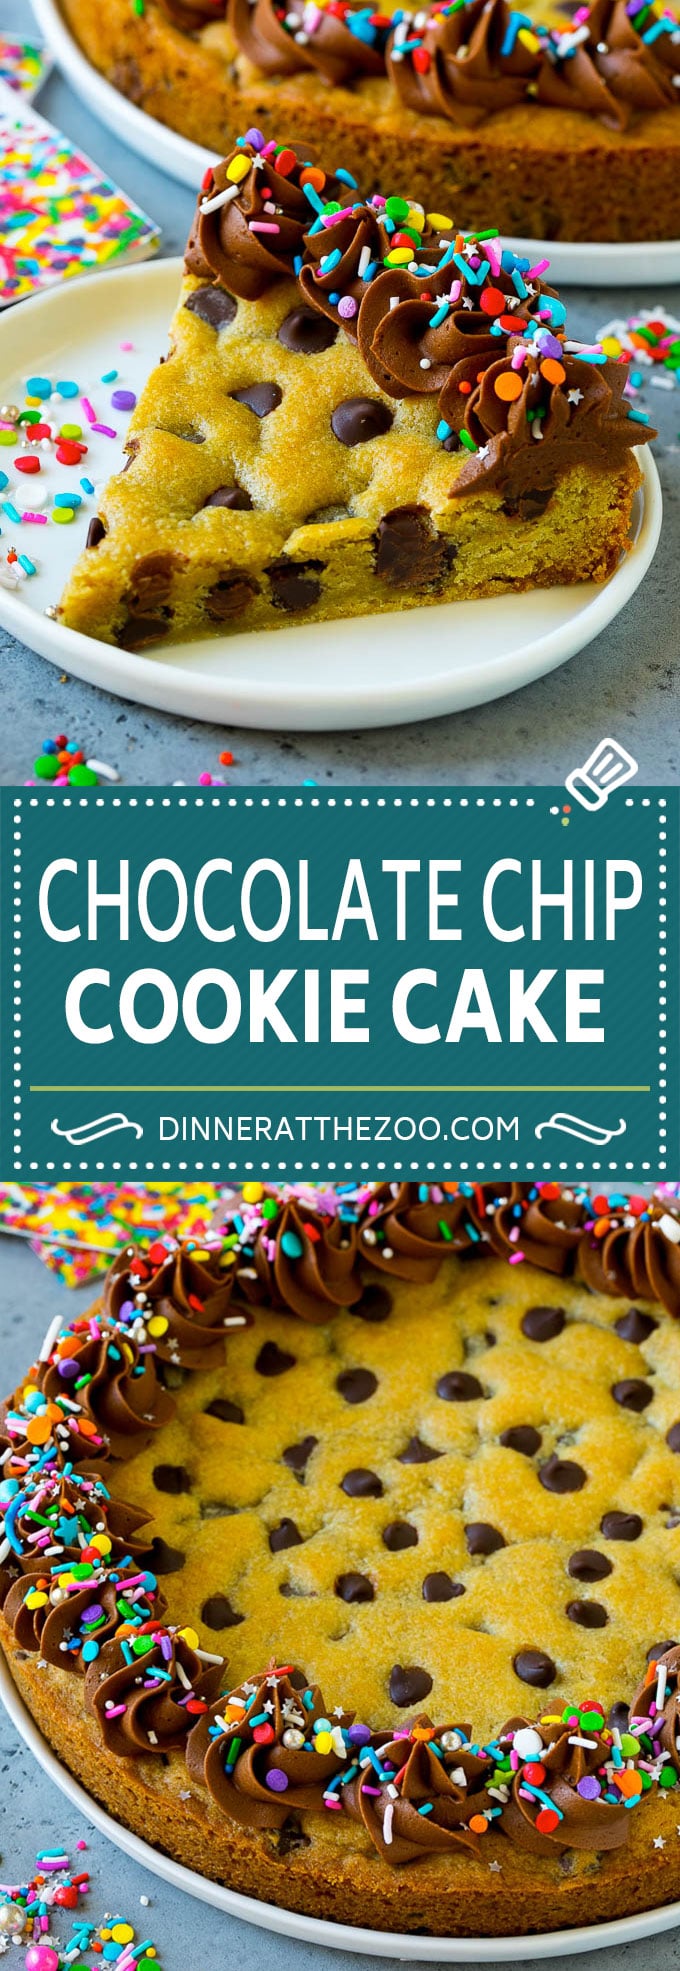 Cookie Cake Recipe | Chocolate Chip Cookie Cake #cookies #cake #chocolate #dessert #dinneratthezoo #sprinkles